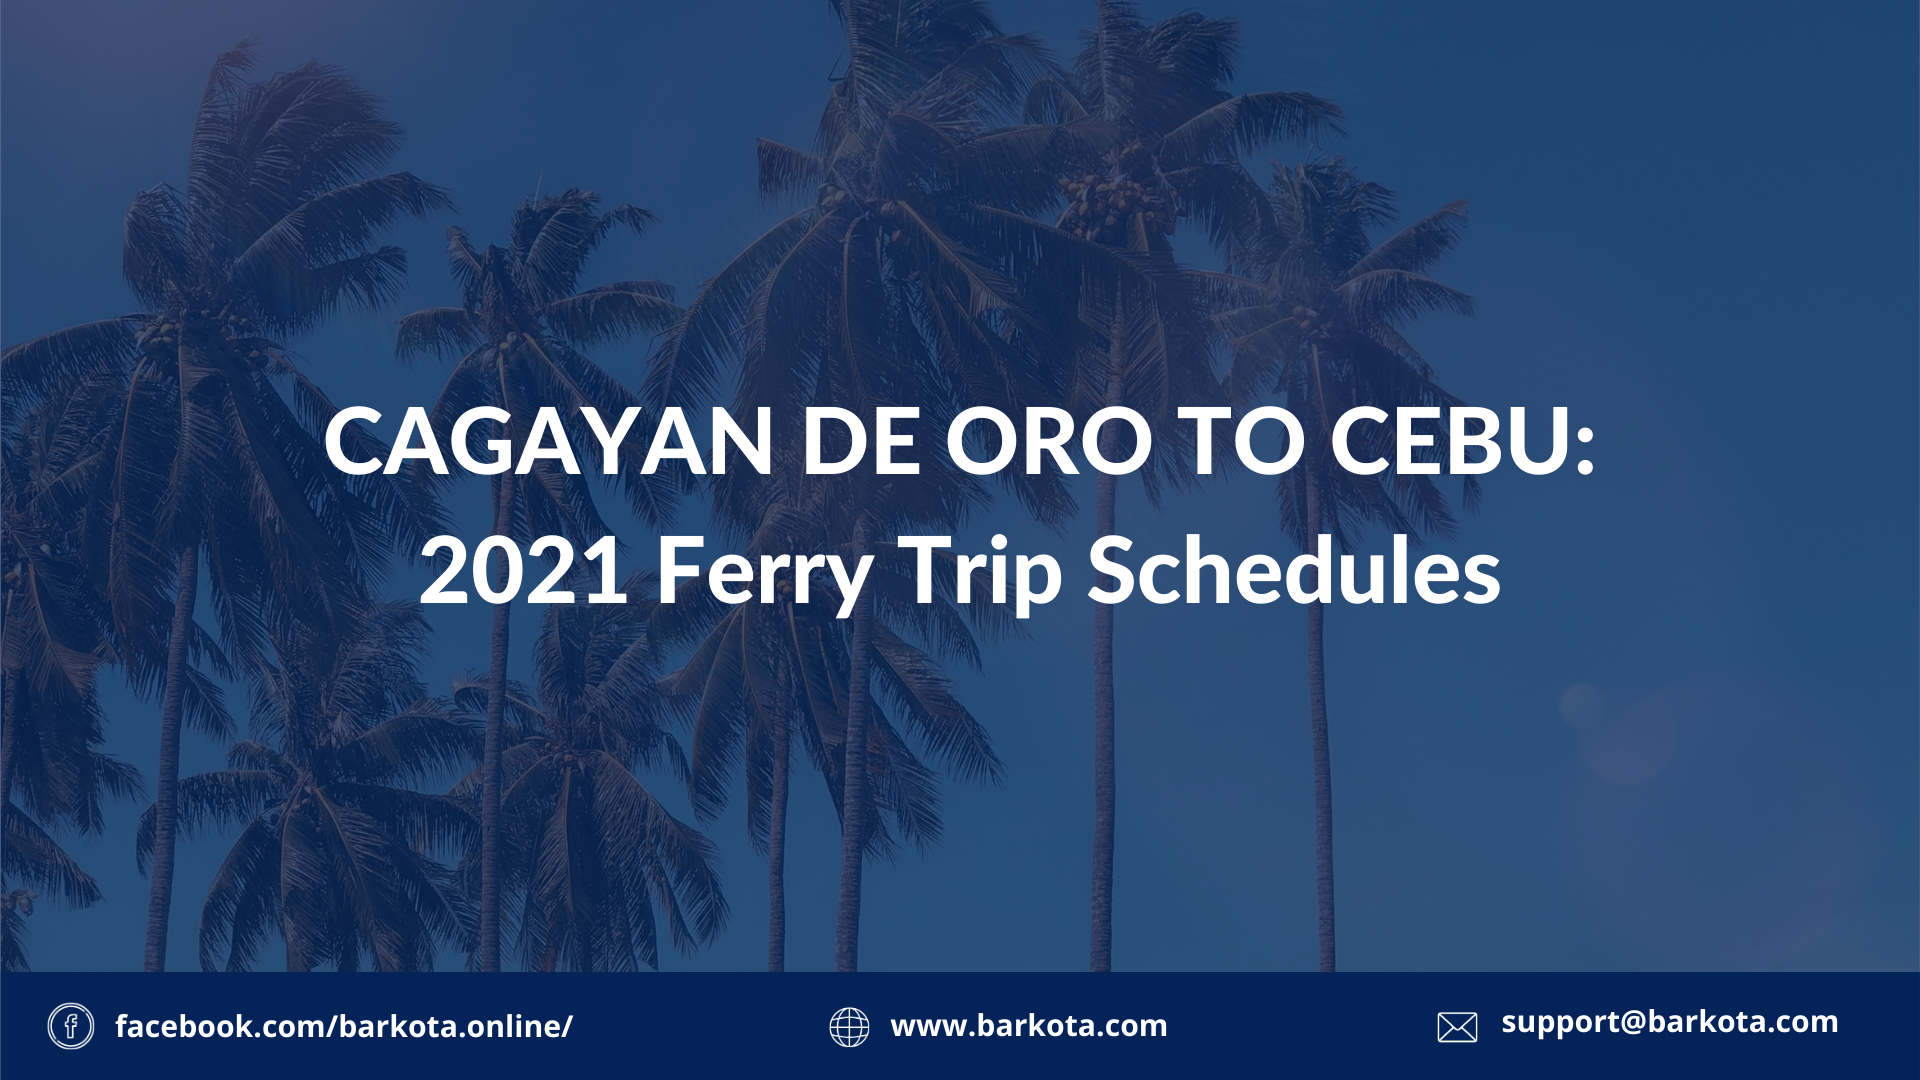 CDO to Cebu